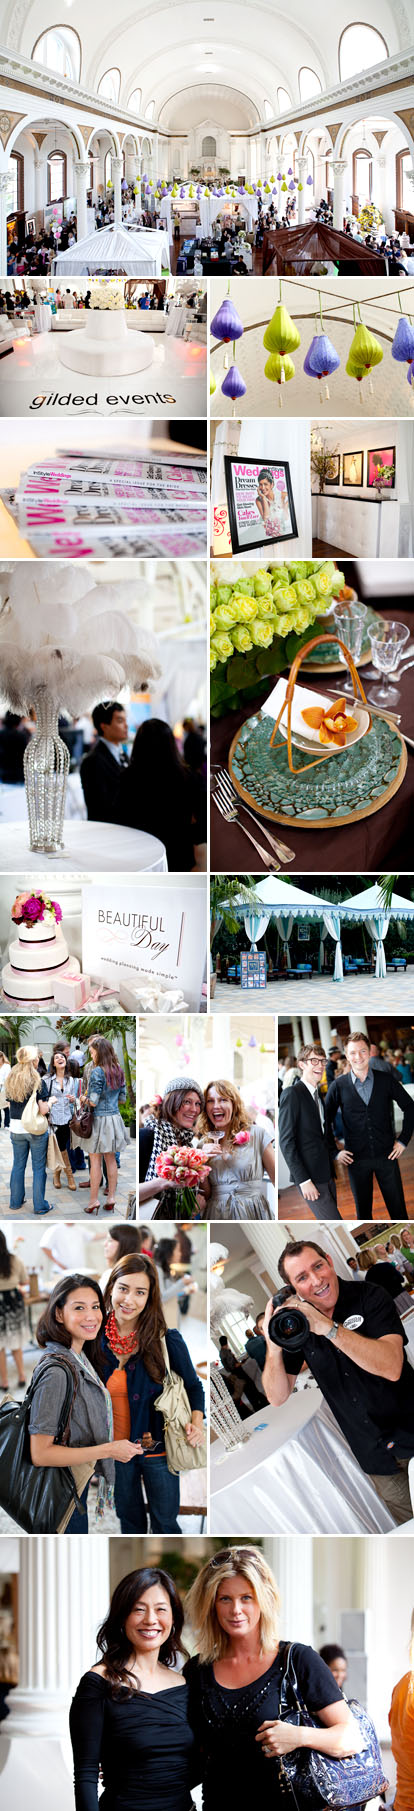 A Soolip Wedding, Los Angeles wedding show, images by Junebug Weddings